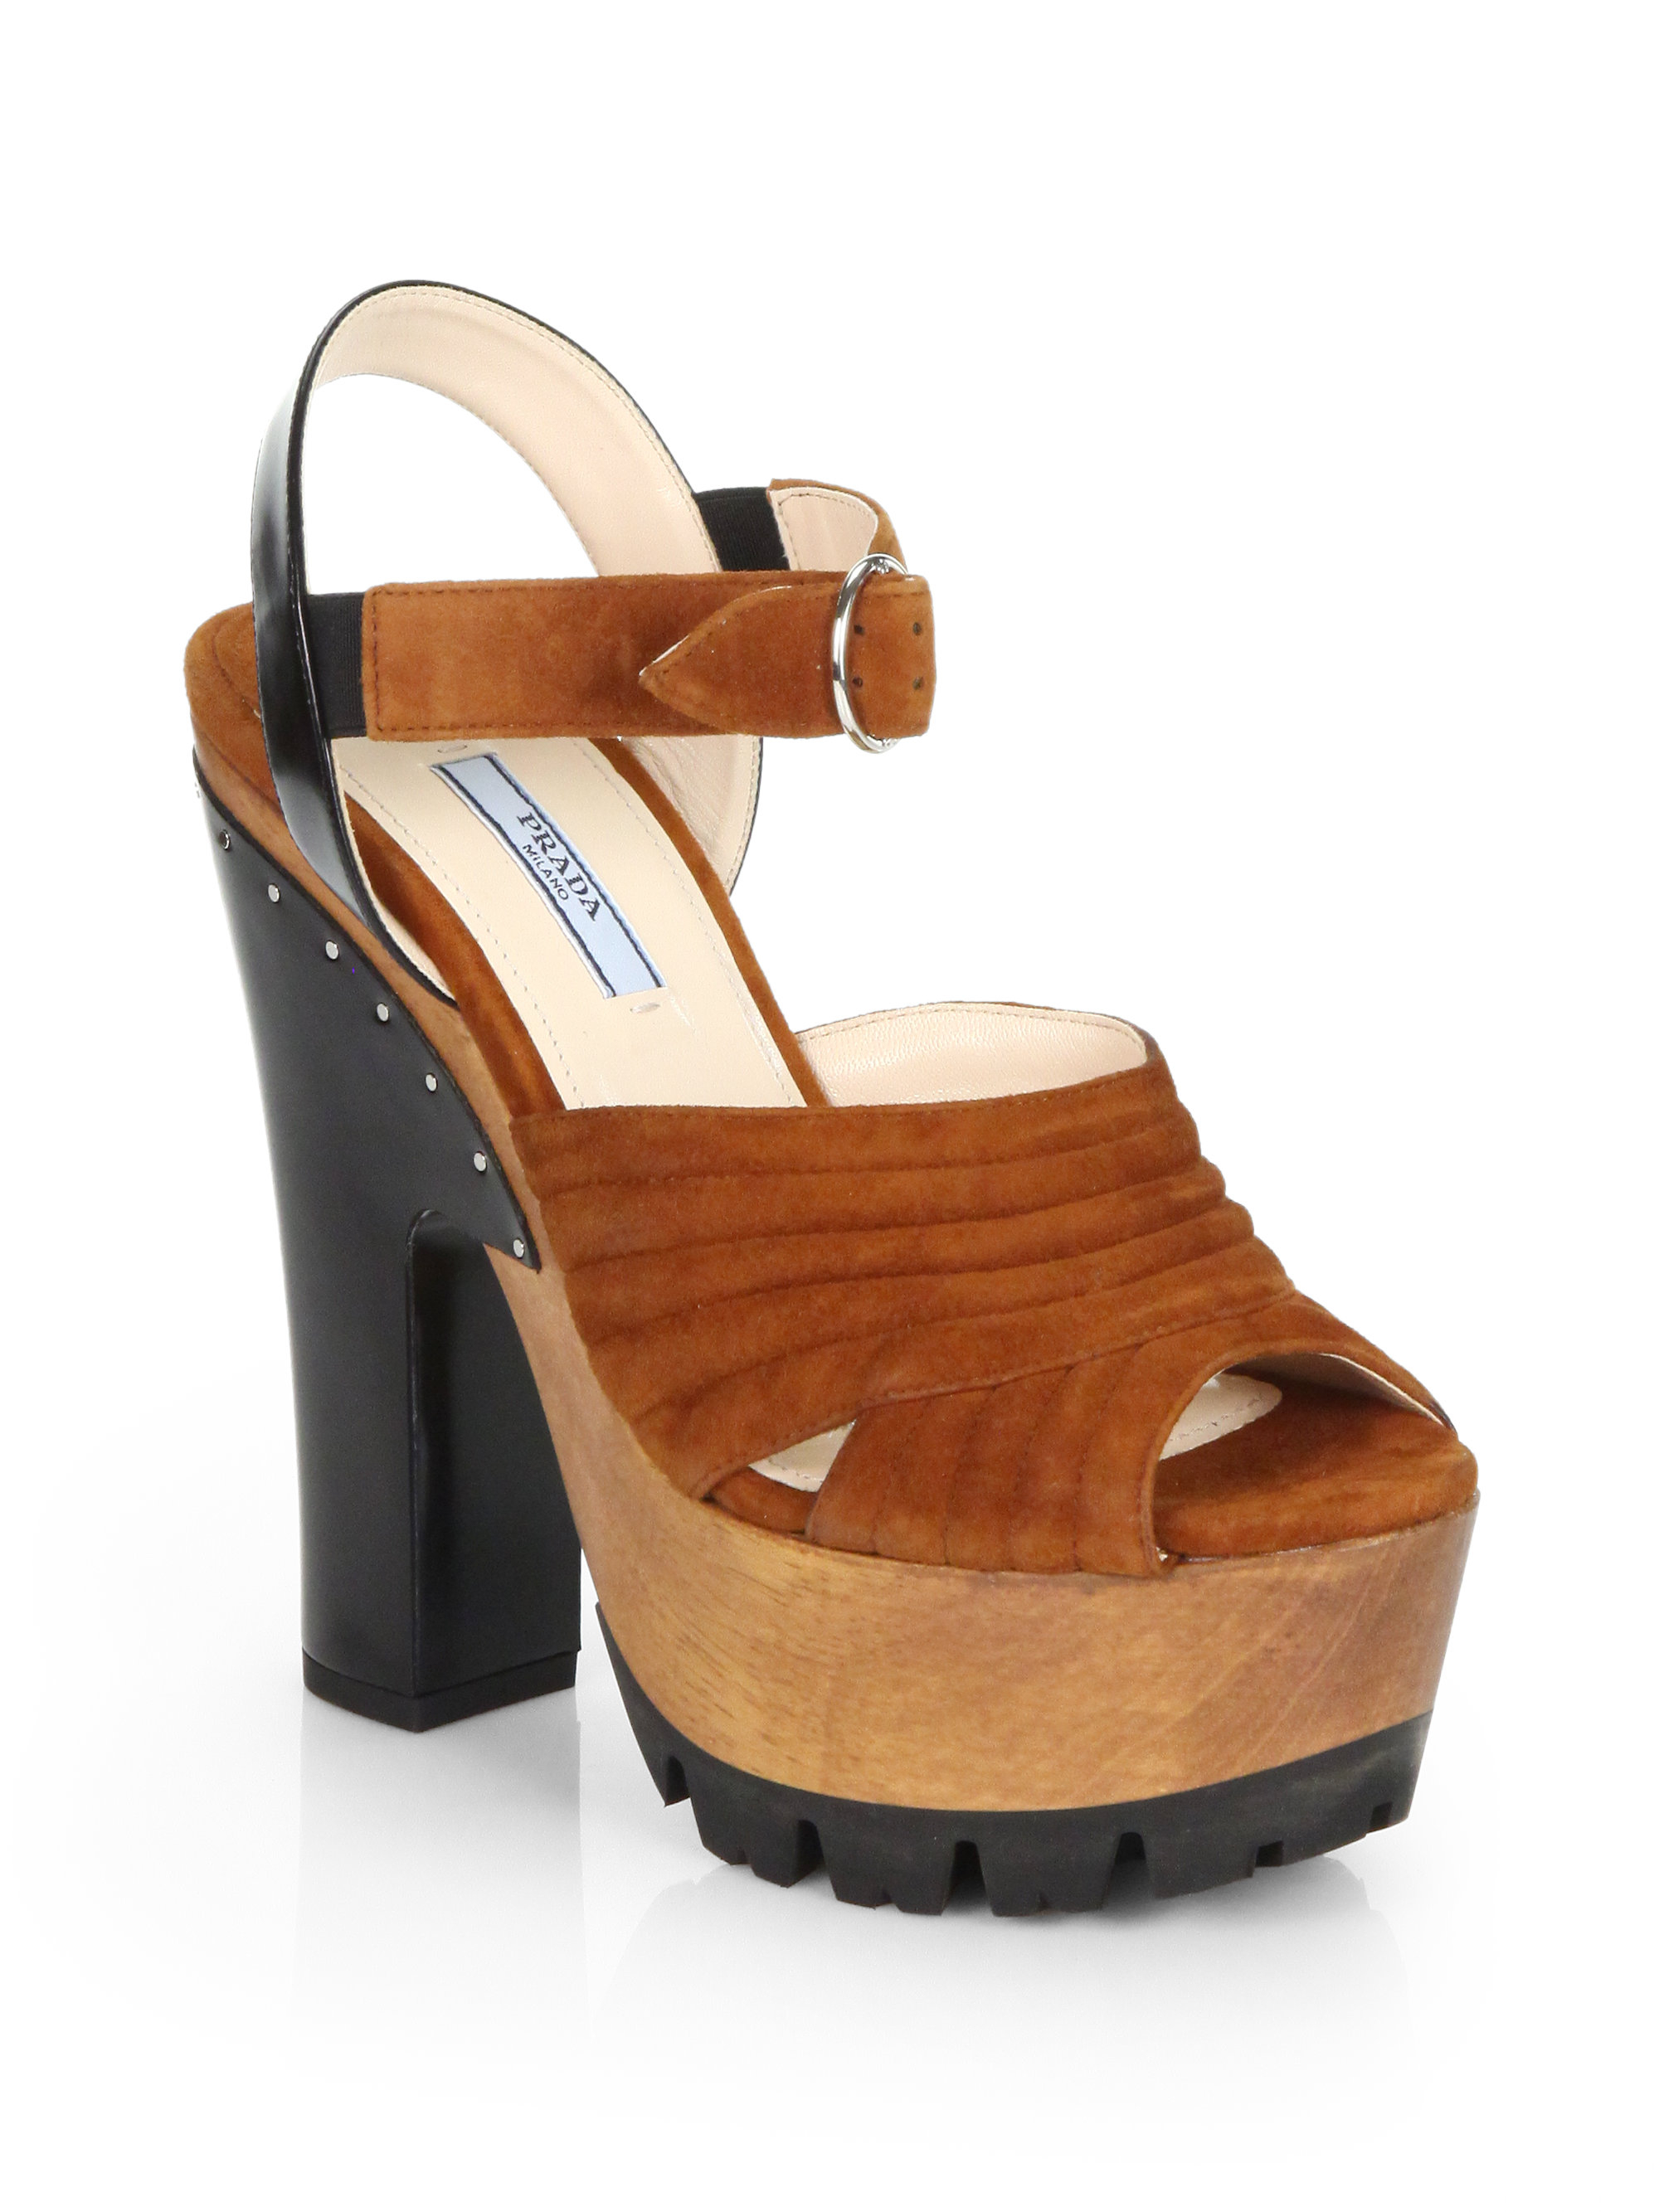 Prada Suede Wooden Platform Sandals in Black (BROWN-BLACK) | Lyst  